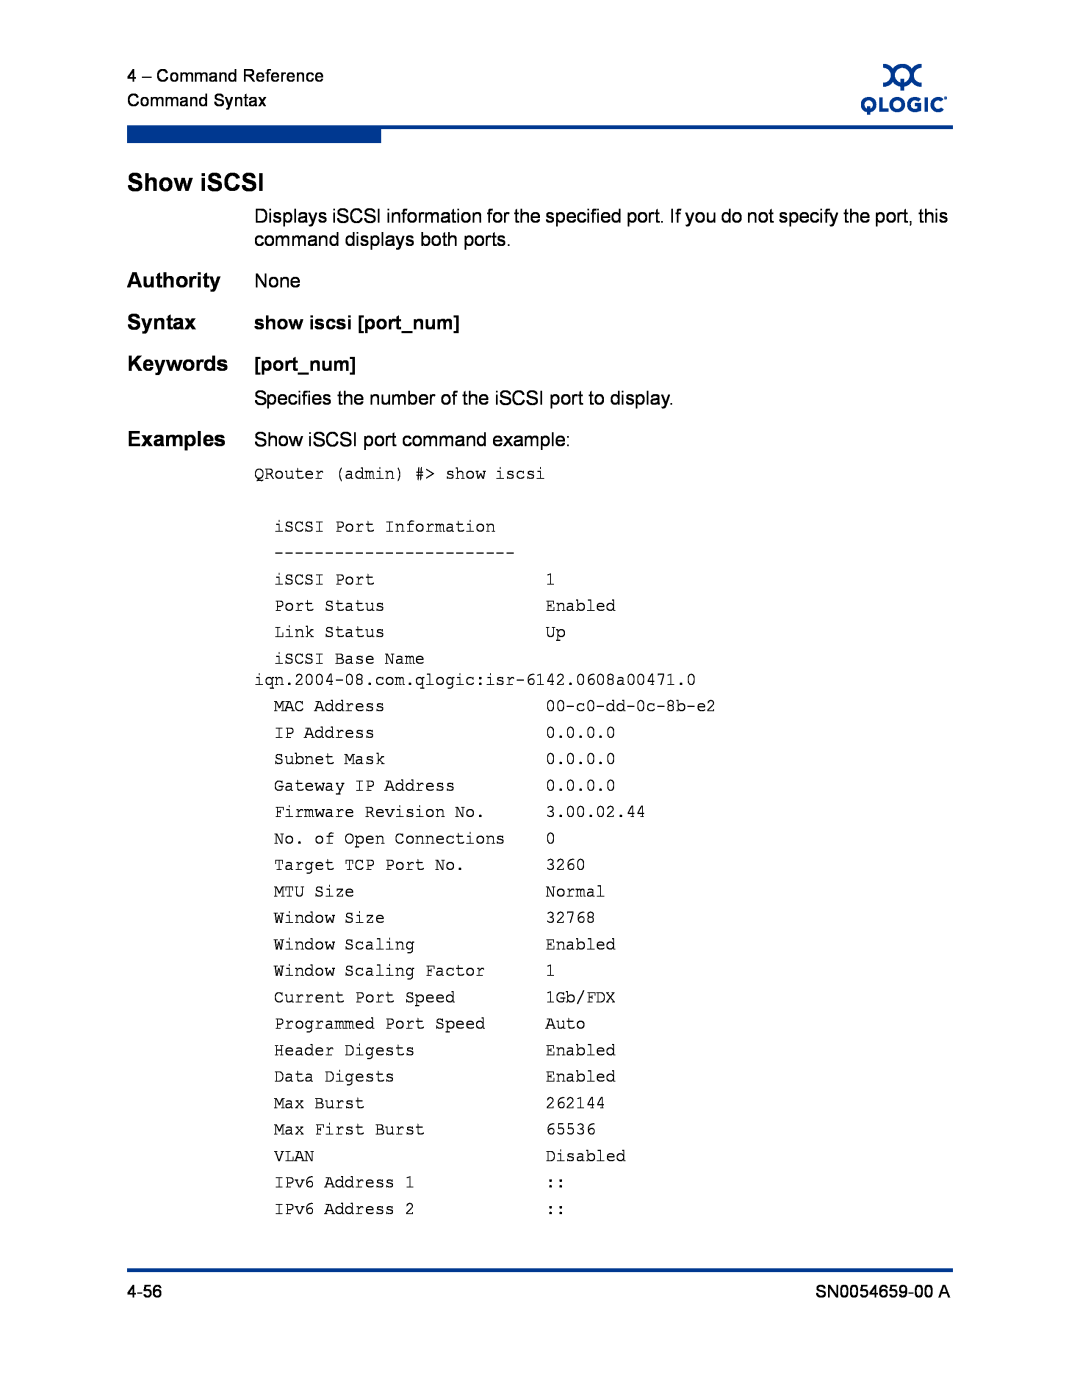 Q-Logic ISR6142 manual Show iSCSI, Authority, Syntax, Keywords, QRouter admin # show iscsi, 00-c0-dd-0c-8b-e2 